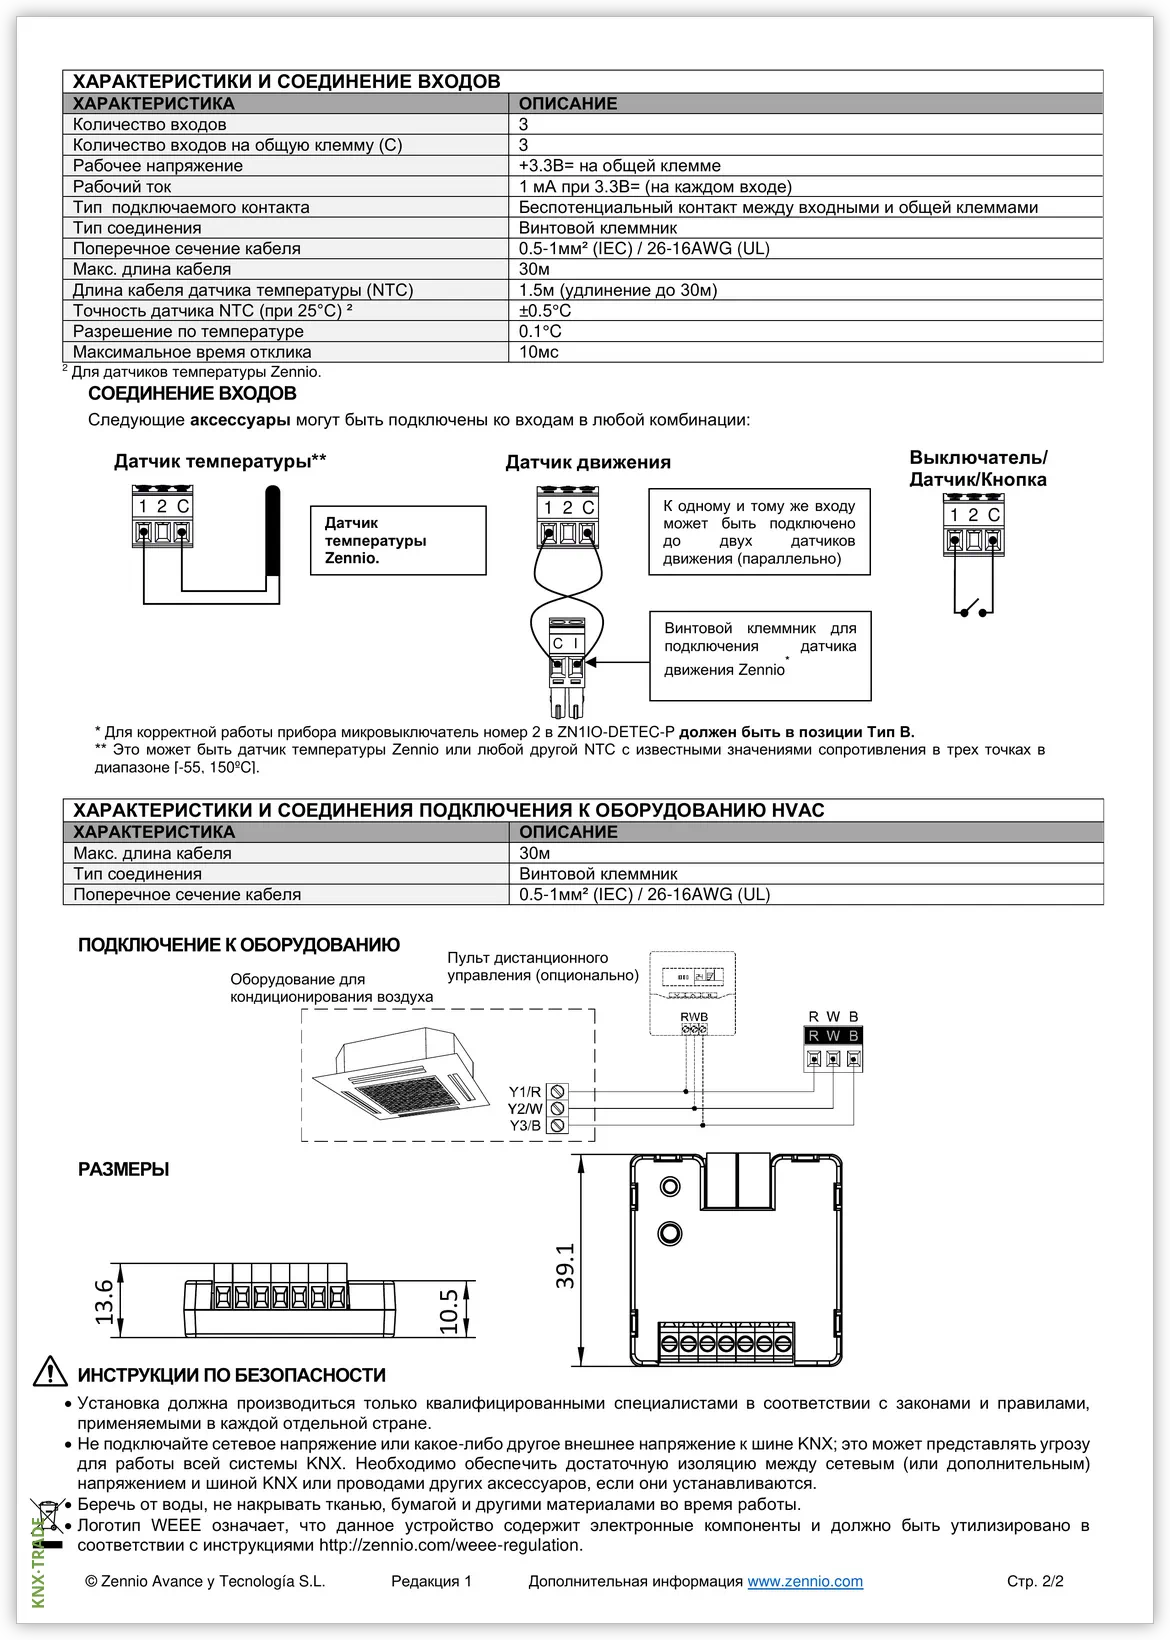 Datasheet (2) Zennio [ZCLFJVT] KLIC-FJ vT / Шлюз KNX для управления кондиционерами Fujitsu